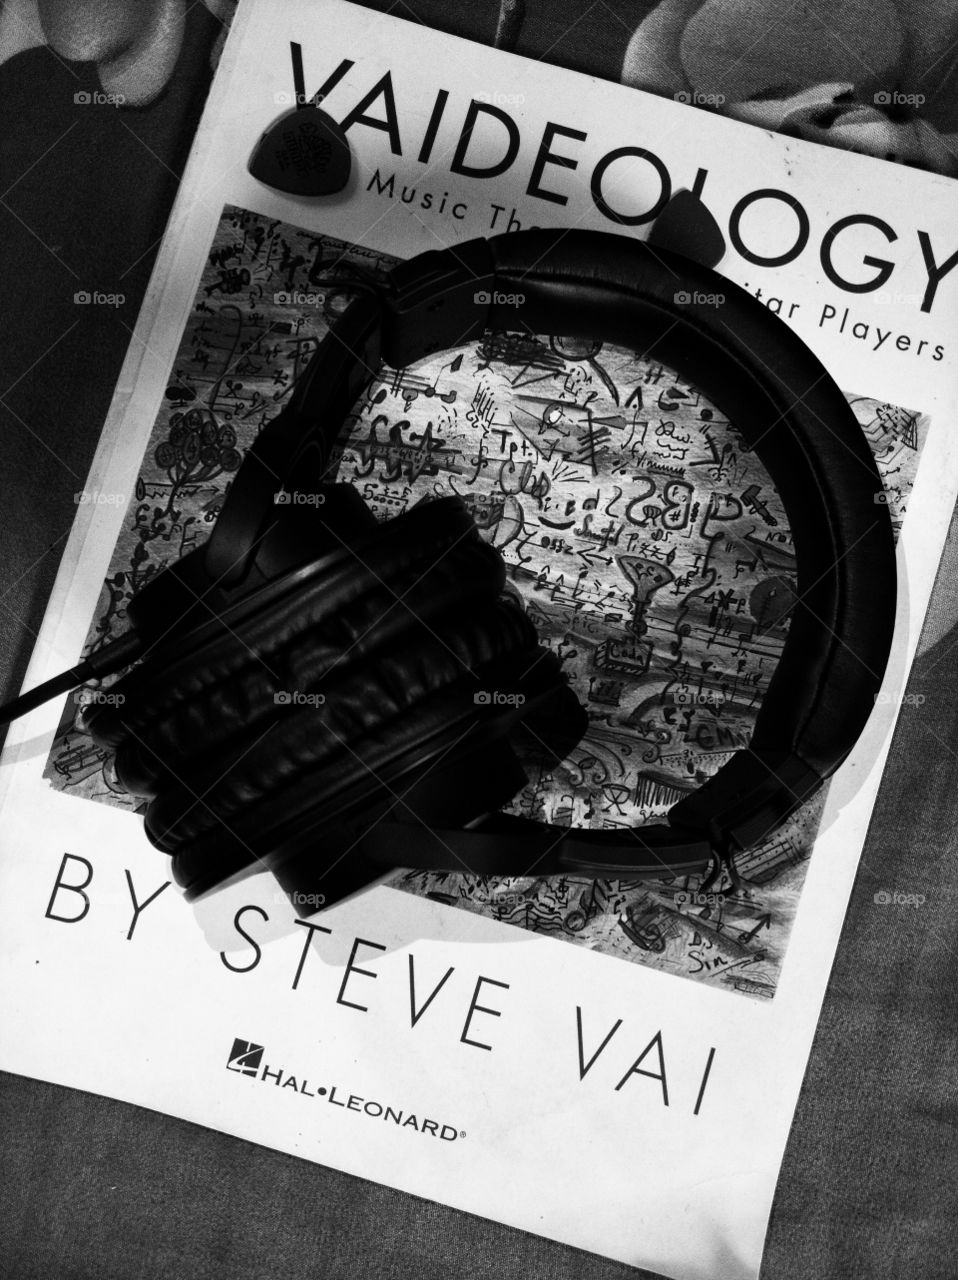 music theory book and headphone